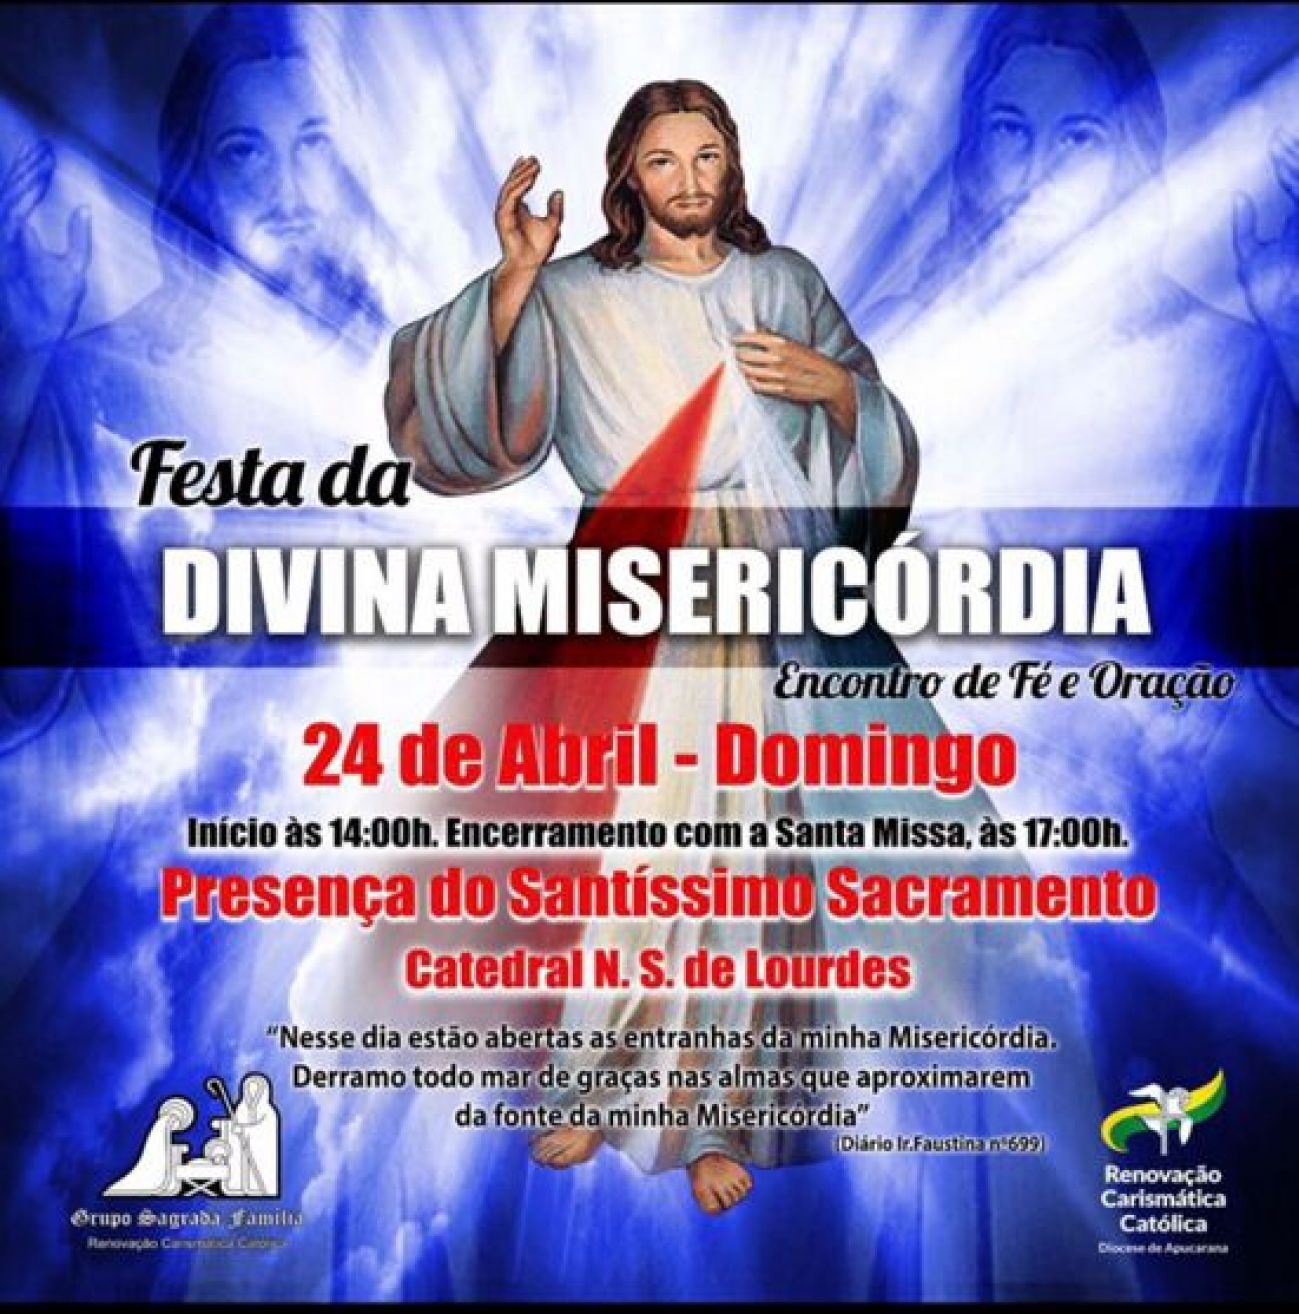 Festa da Divina Misericórdia acontece neste domingo (24) CGN